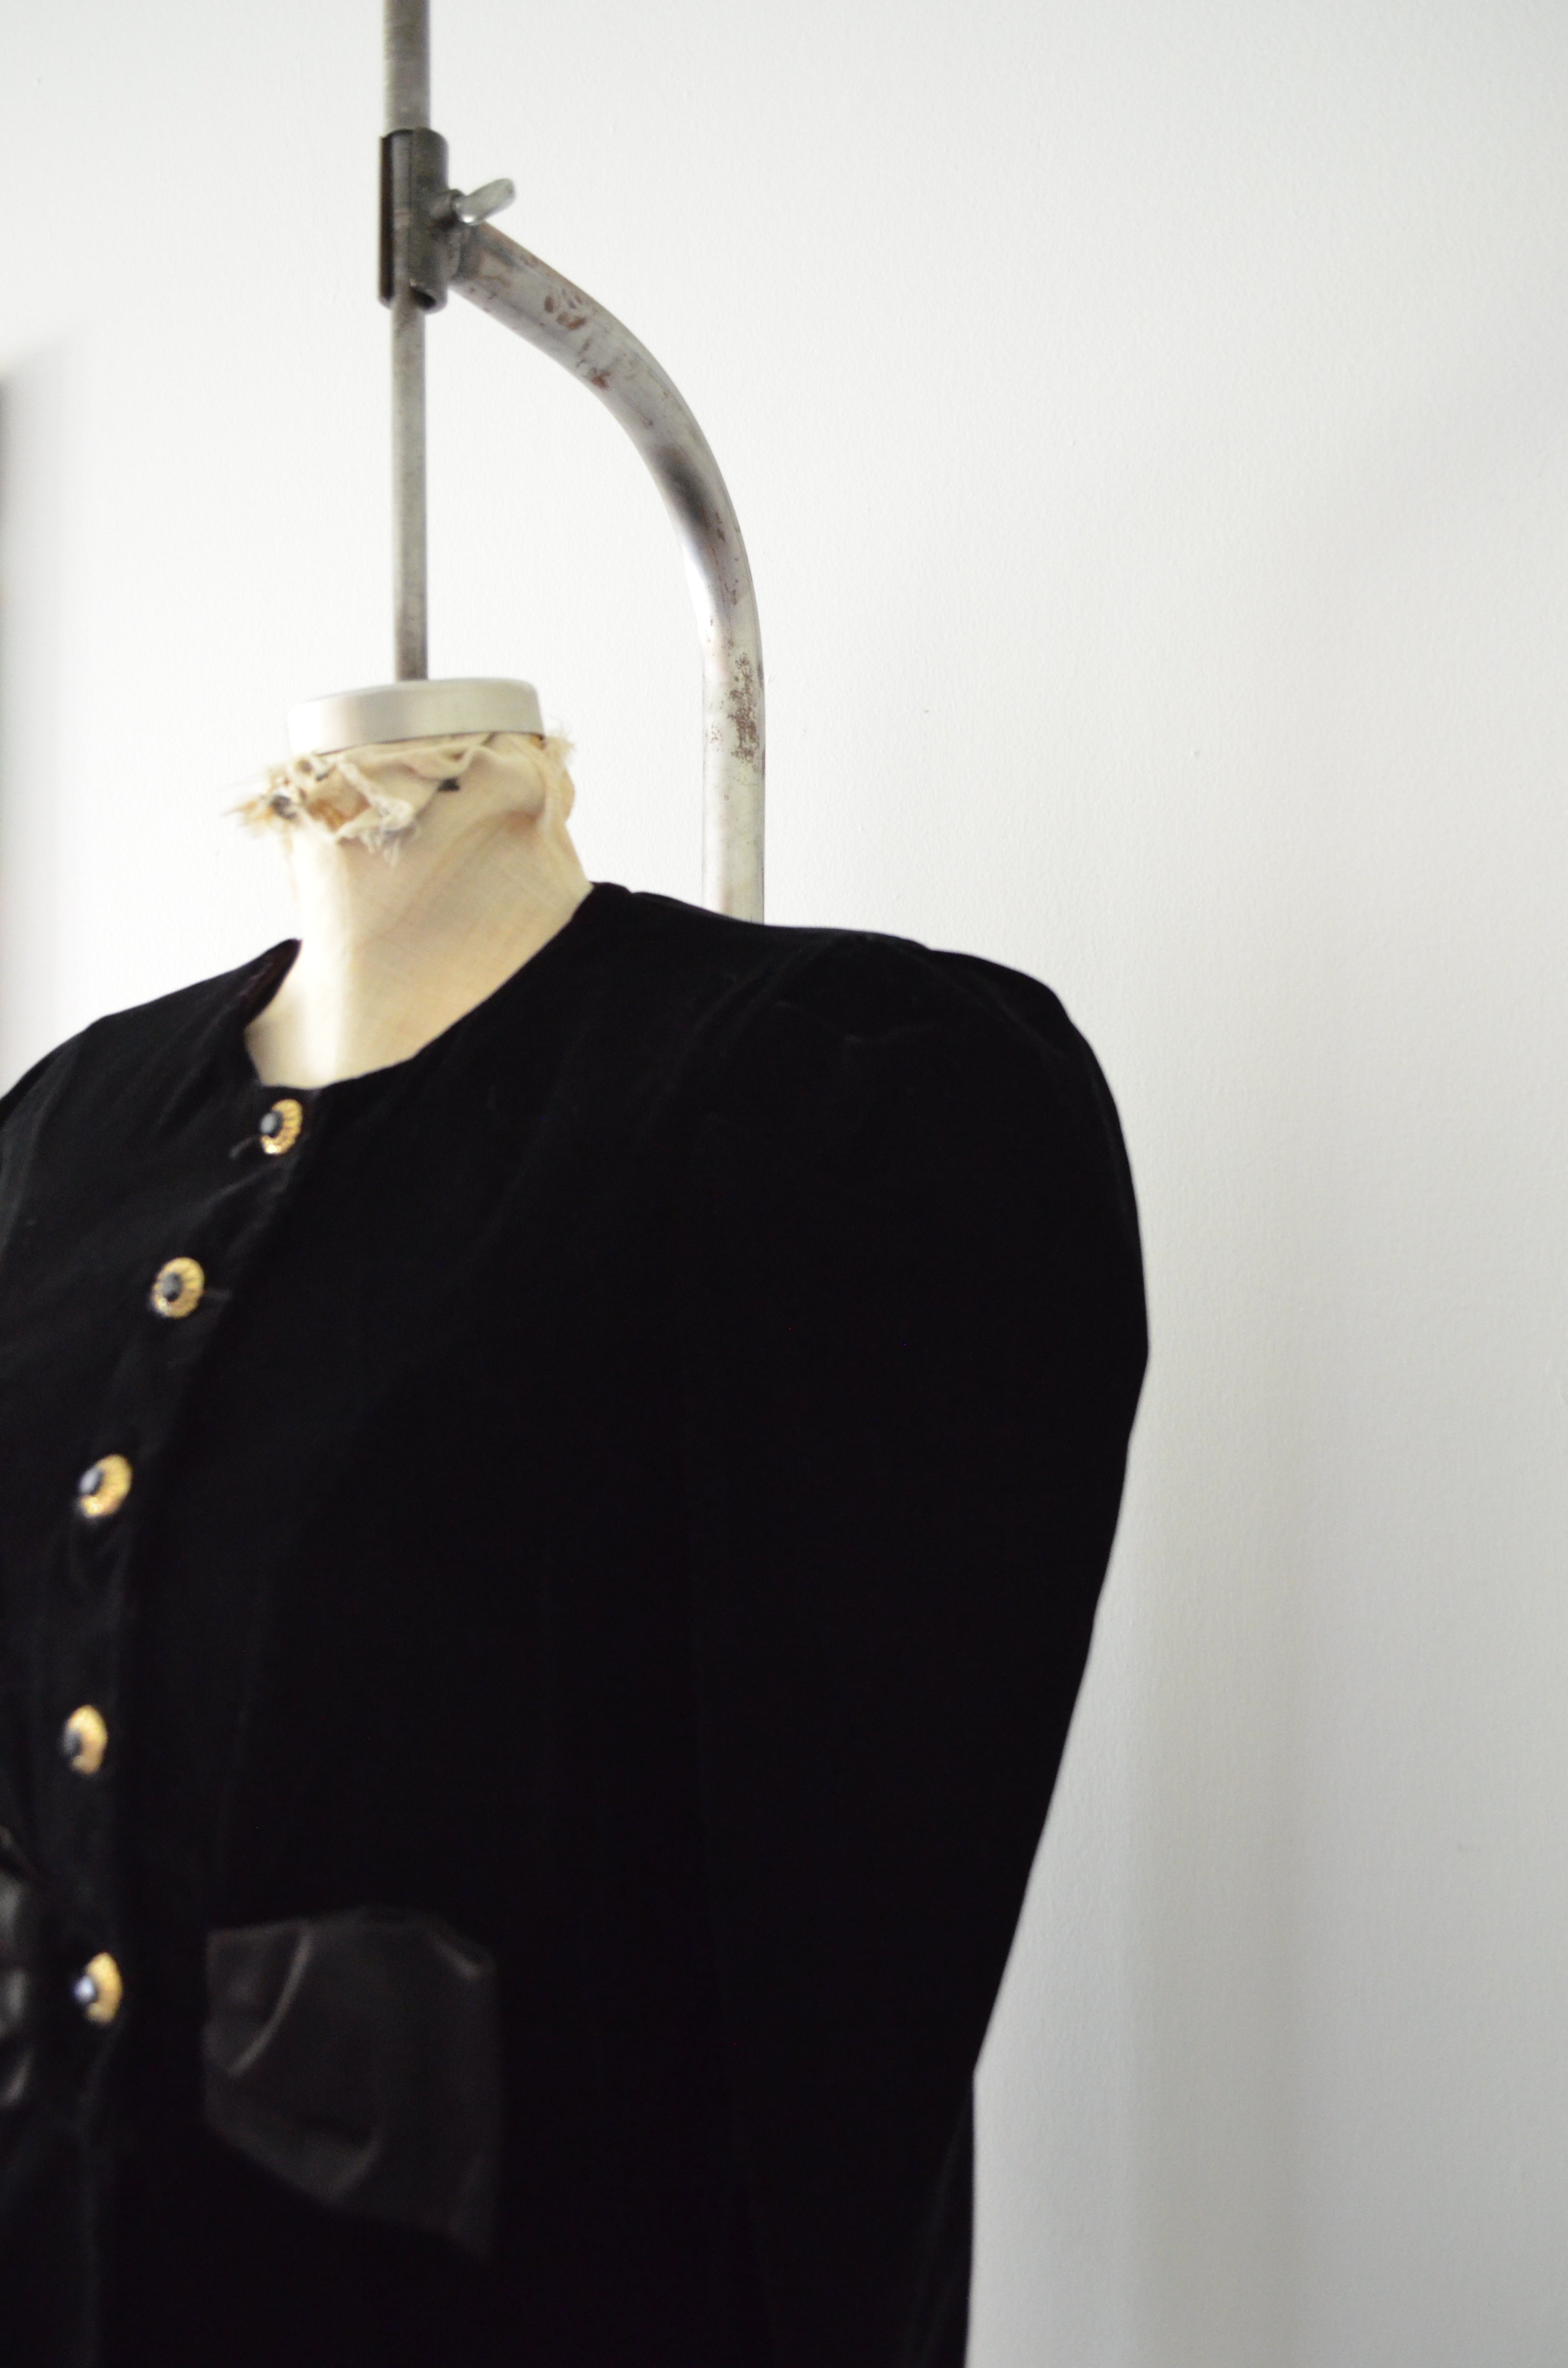 Cache by Bari Protas Black Velvet Gold Buttons Ribbon Cropped Jacket Blazer